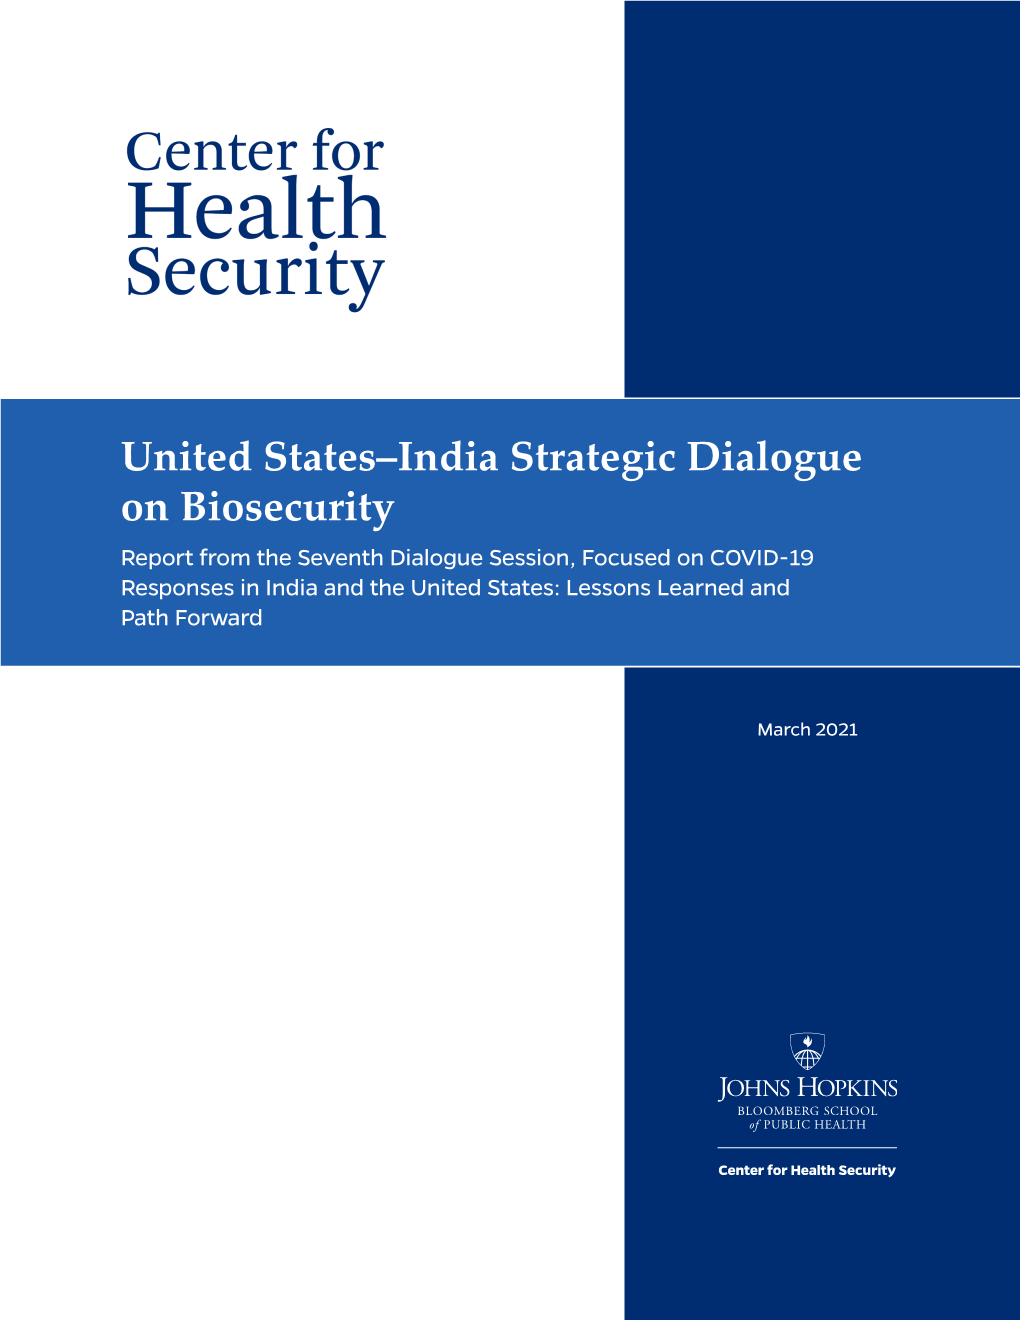 United States–India Strategic Dialogue on Biosecurity